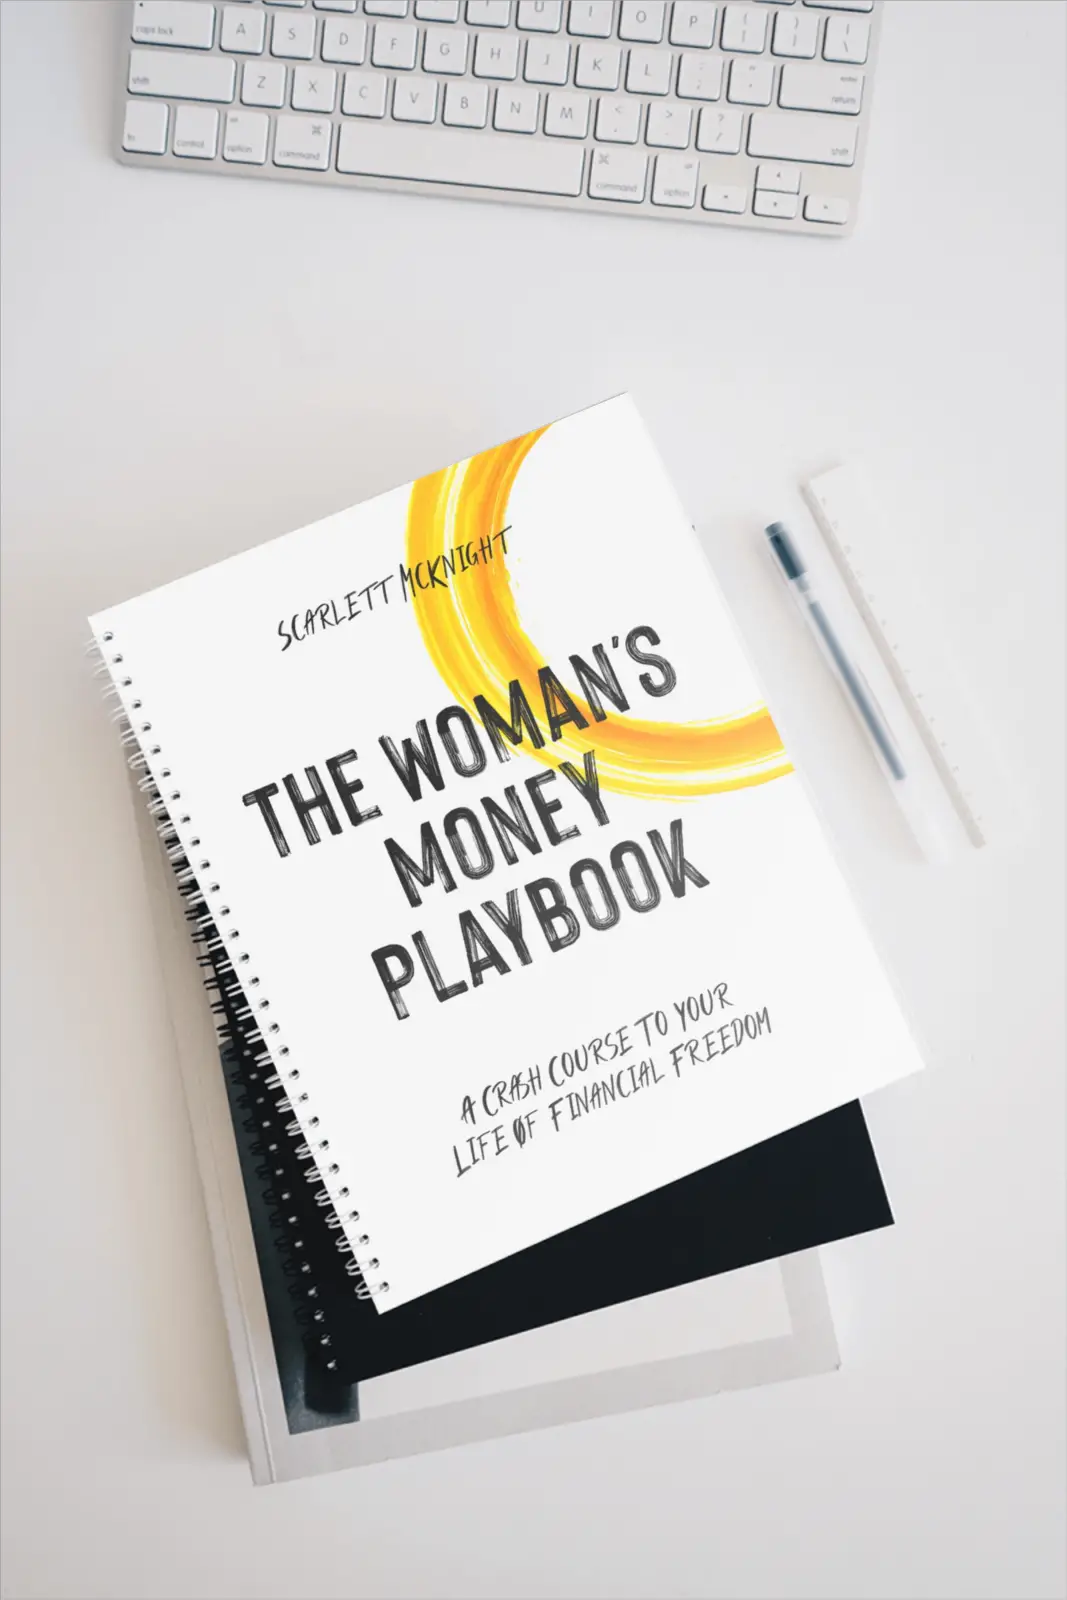 womans money playbook